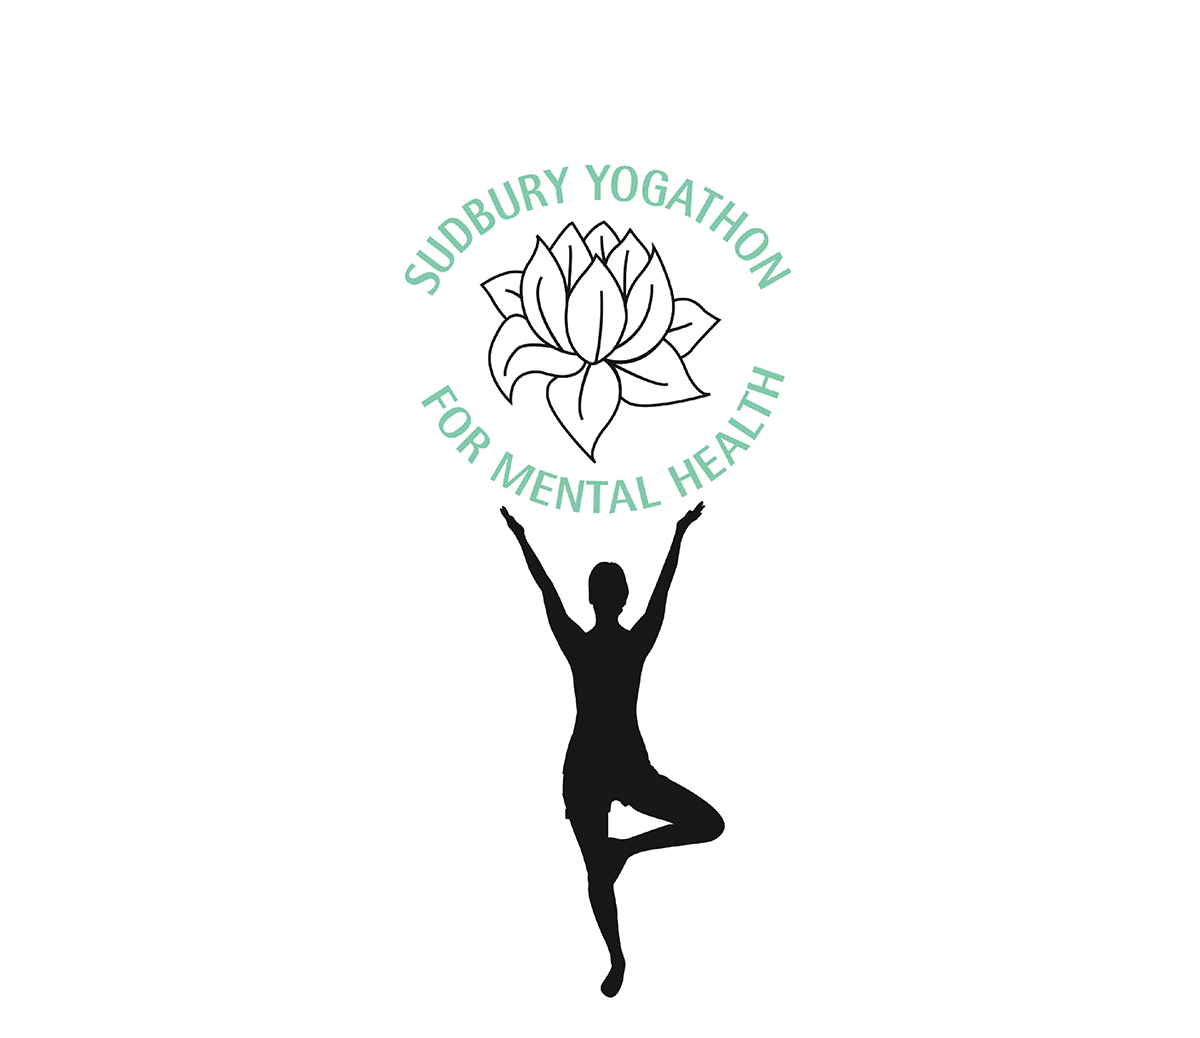 Sudbury's First Yogathon for Mental Health